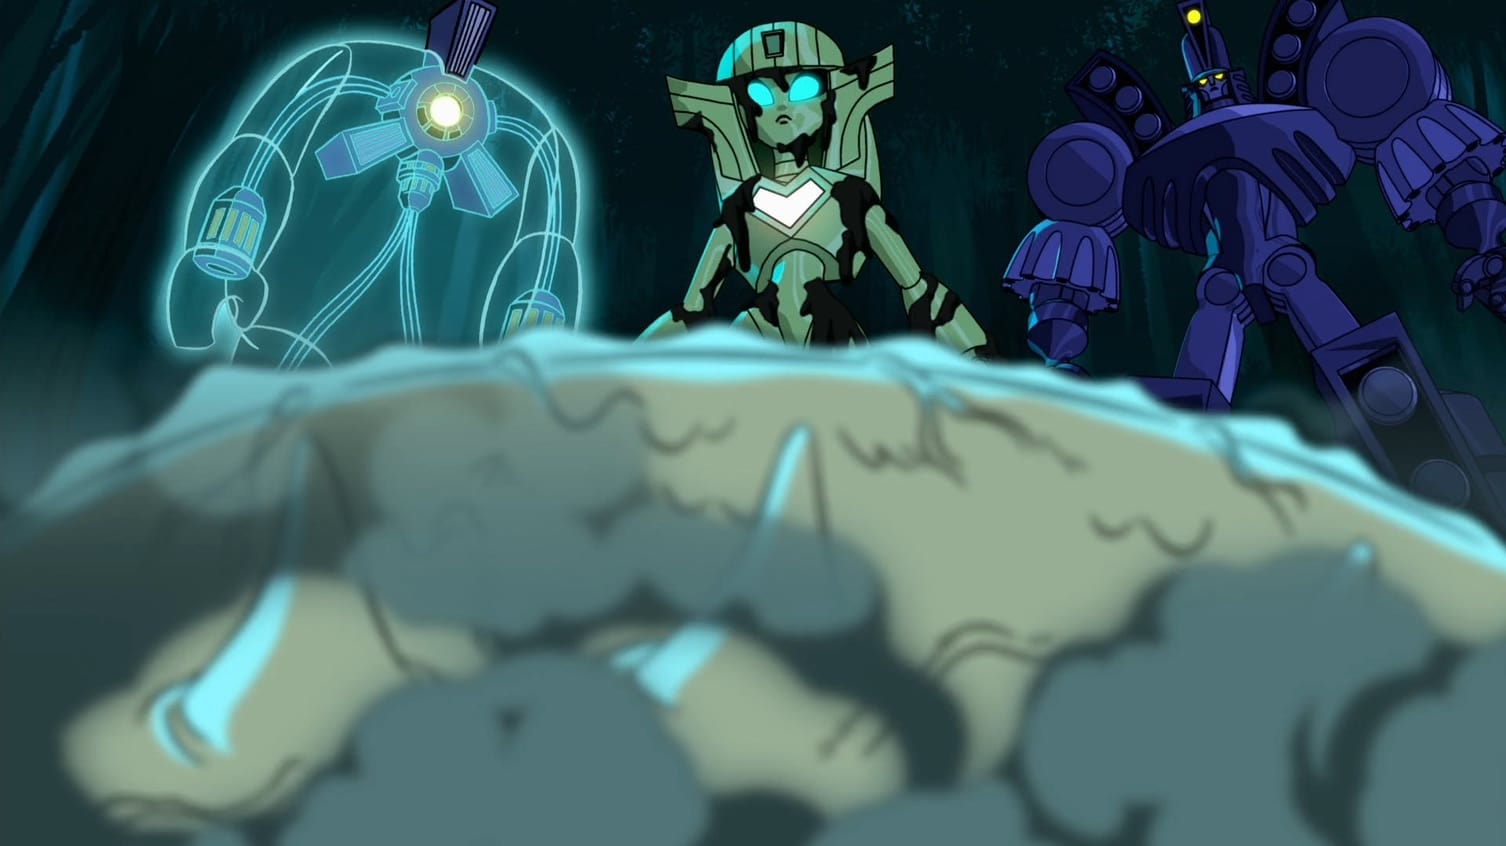 Poster del episodio 13 de Sym-Bionic Titan online